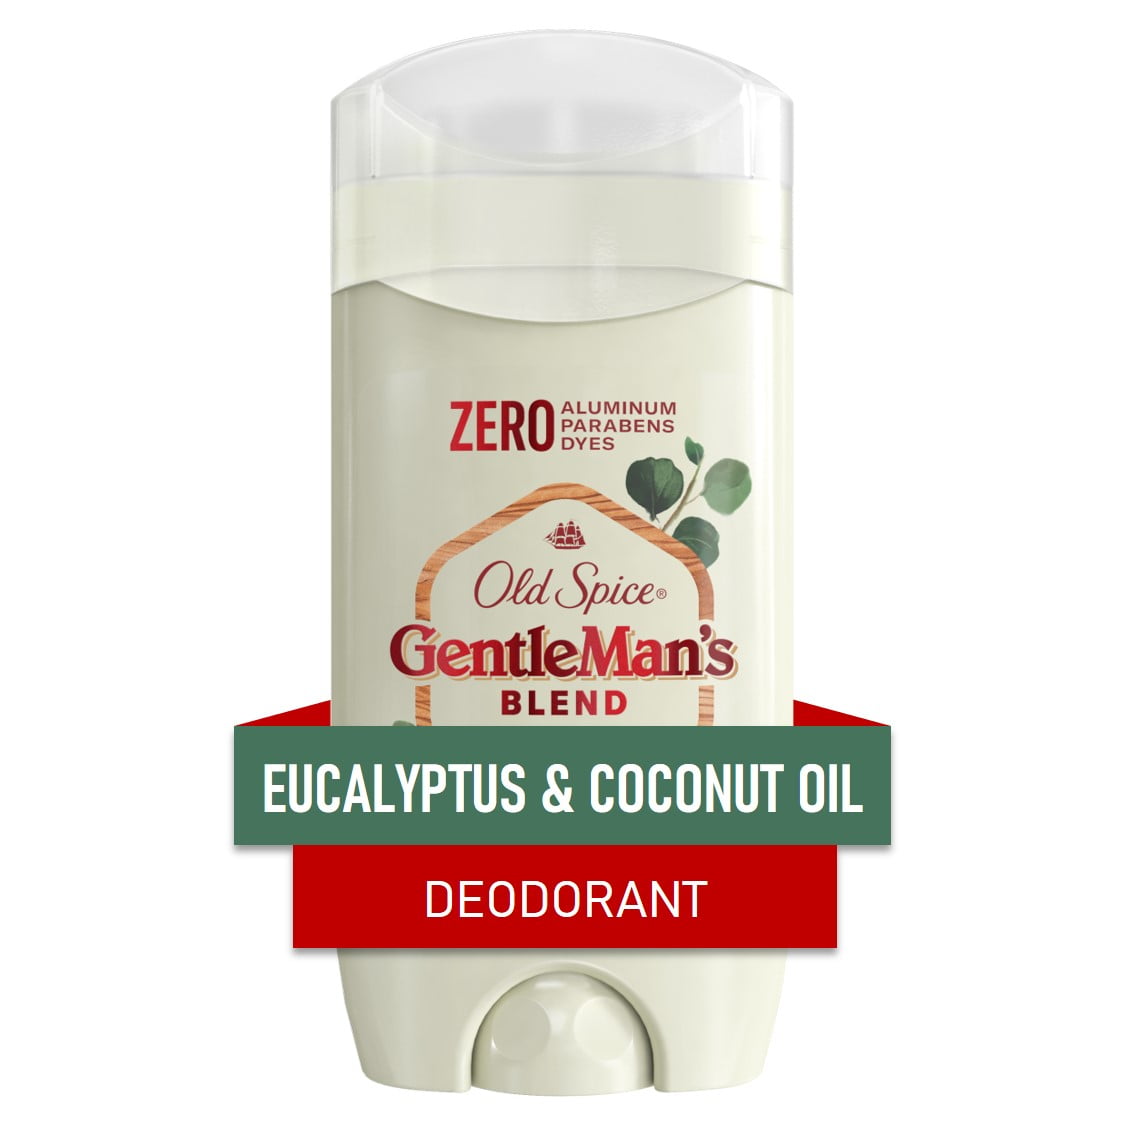 Old Spice Men's Deodorant Eucalyptus with Coconut Oil, Aluminum Free, 3.0 oz